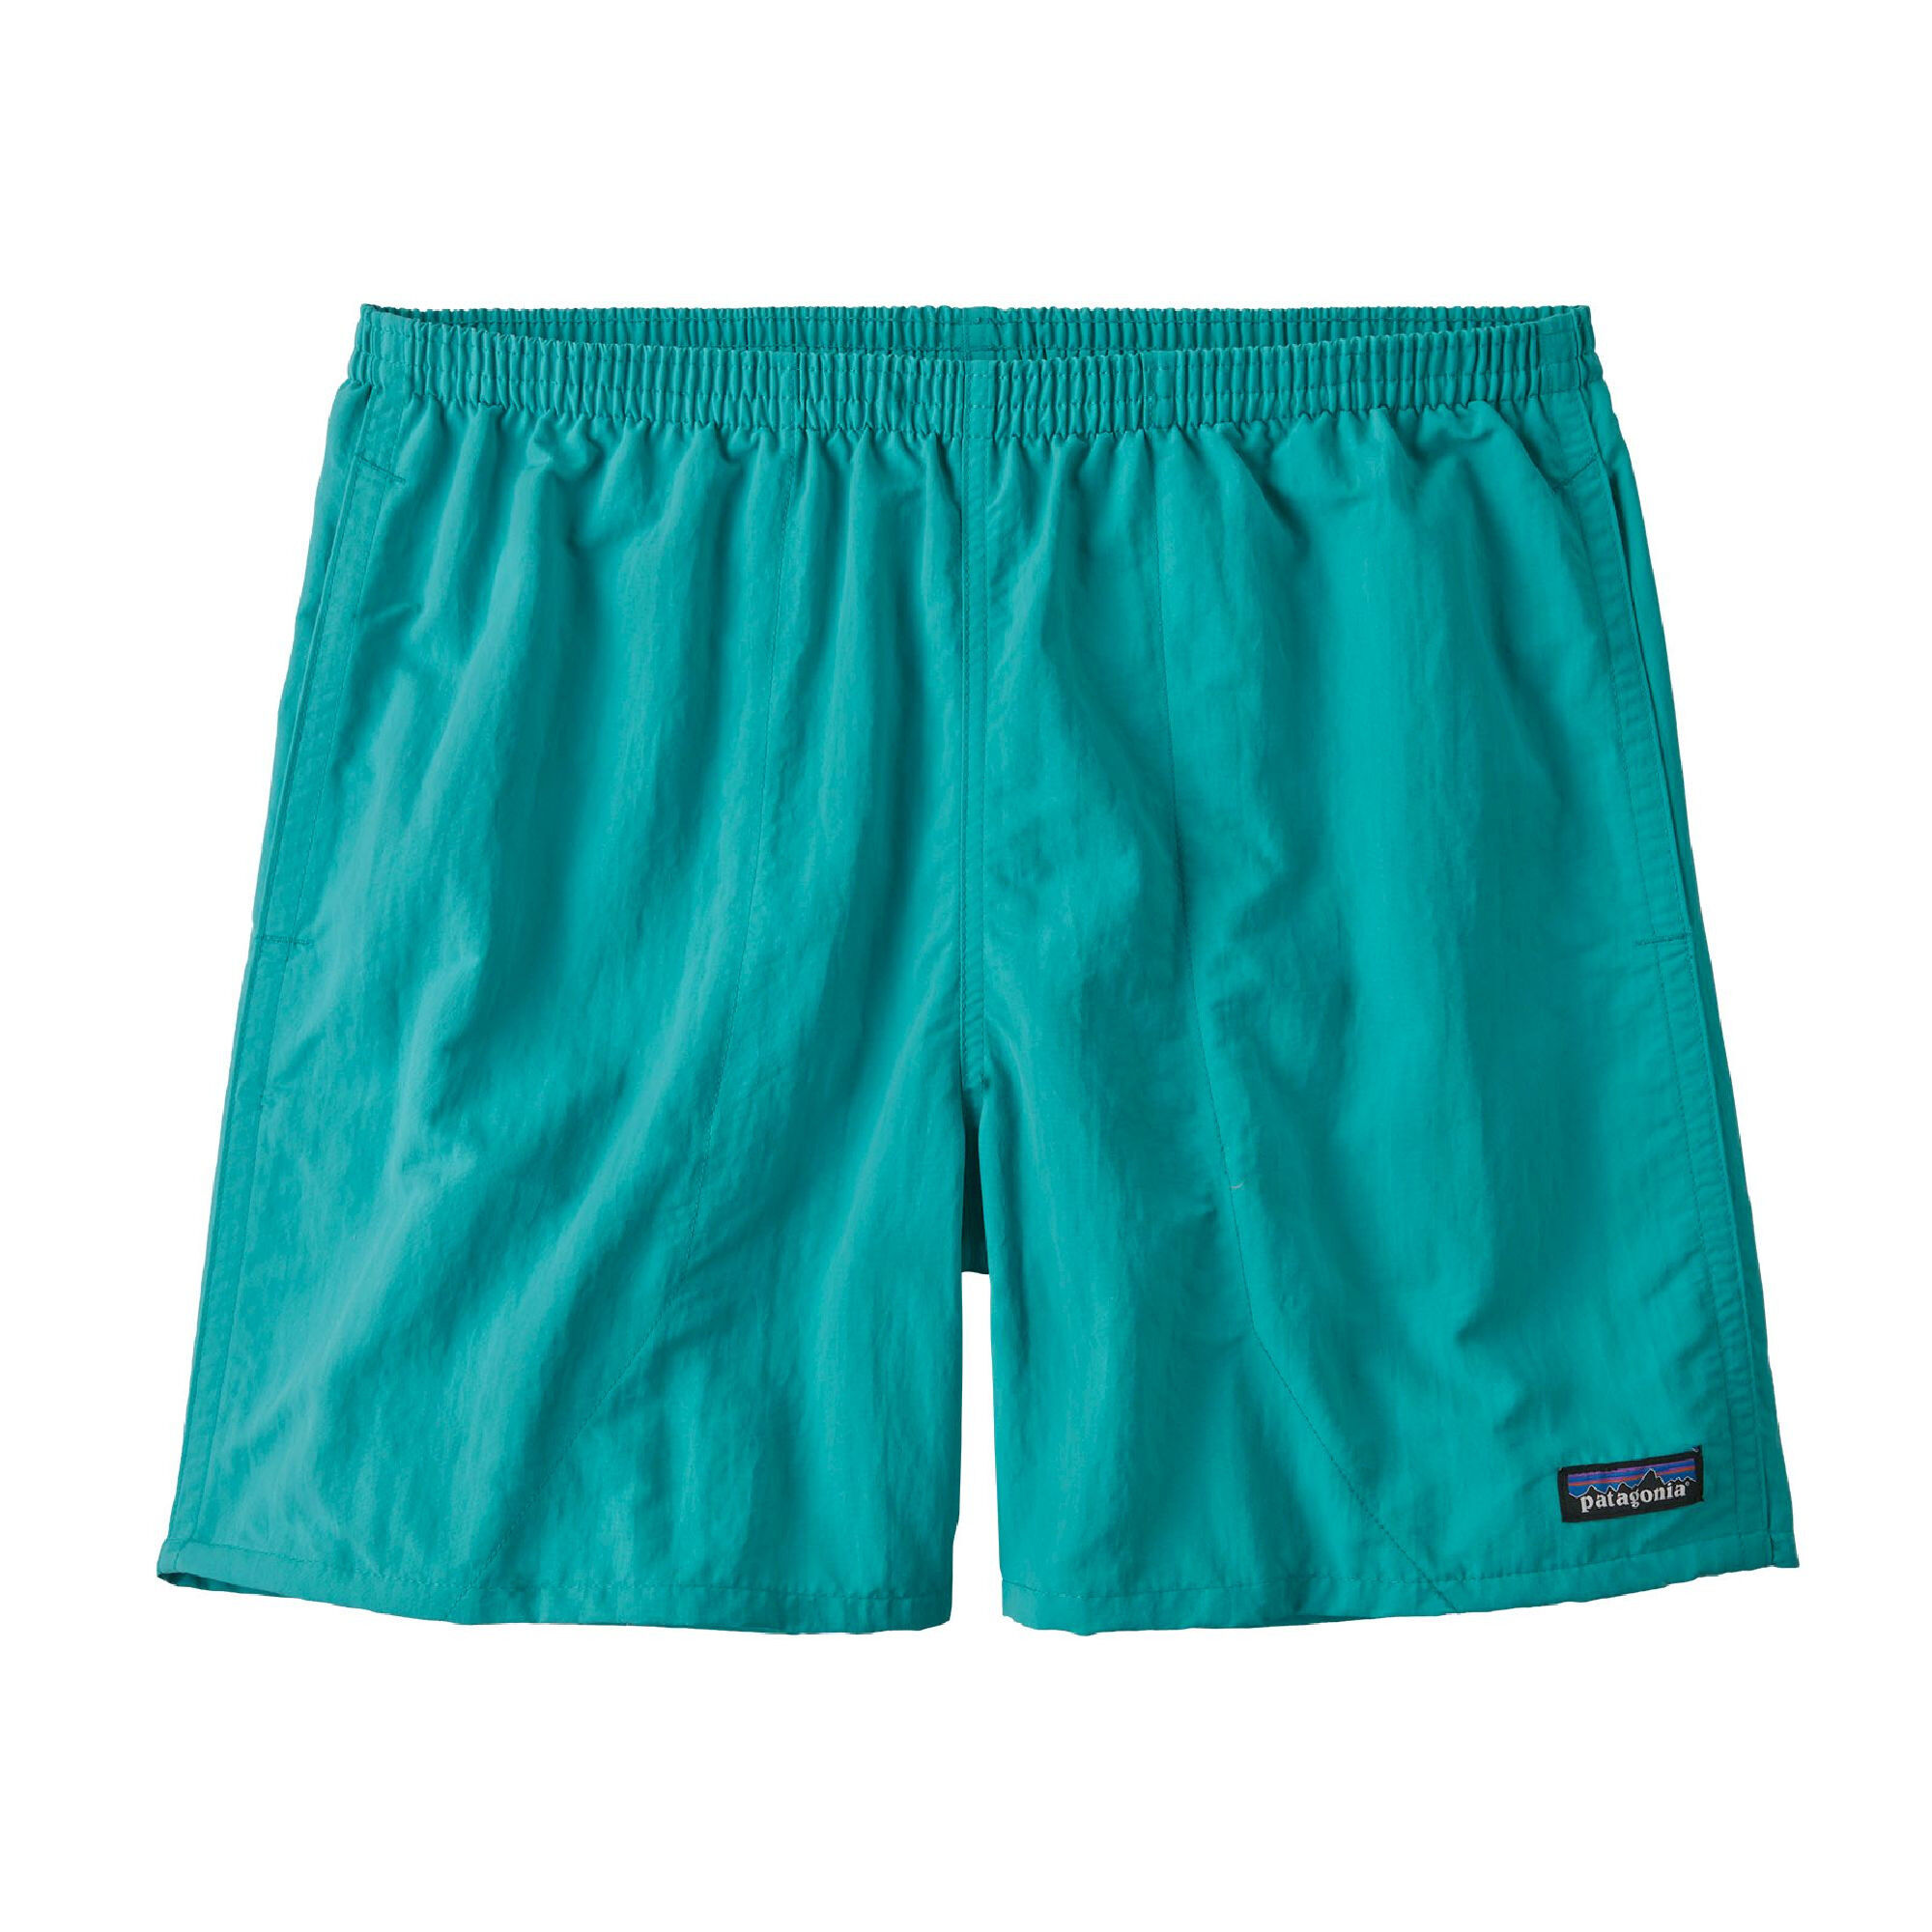 Patagonia Baggies Shorts 5 in. - Pantalones cortos - Hombre